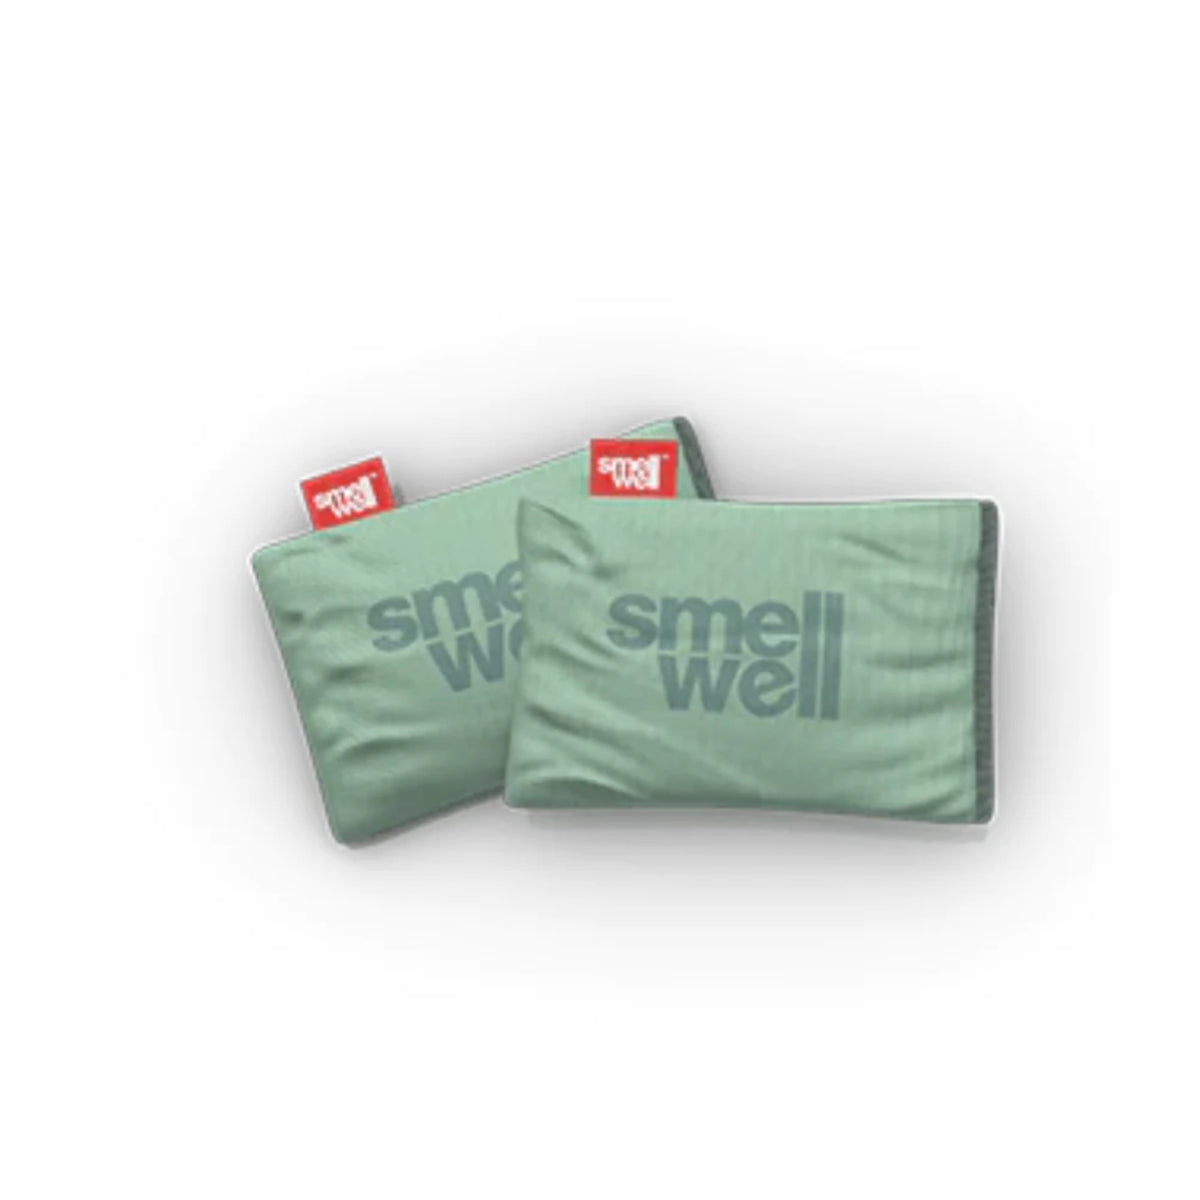 SmellWell Shoe Deodoriser